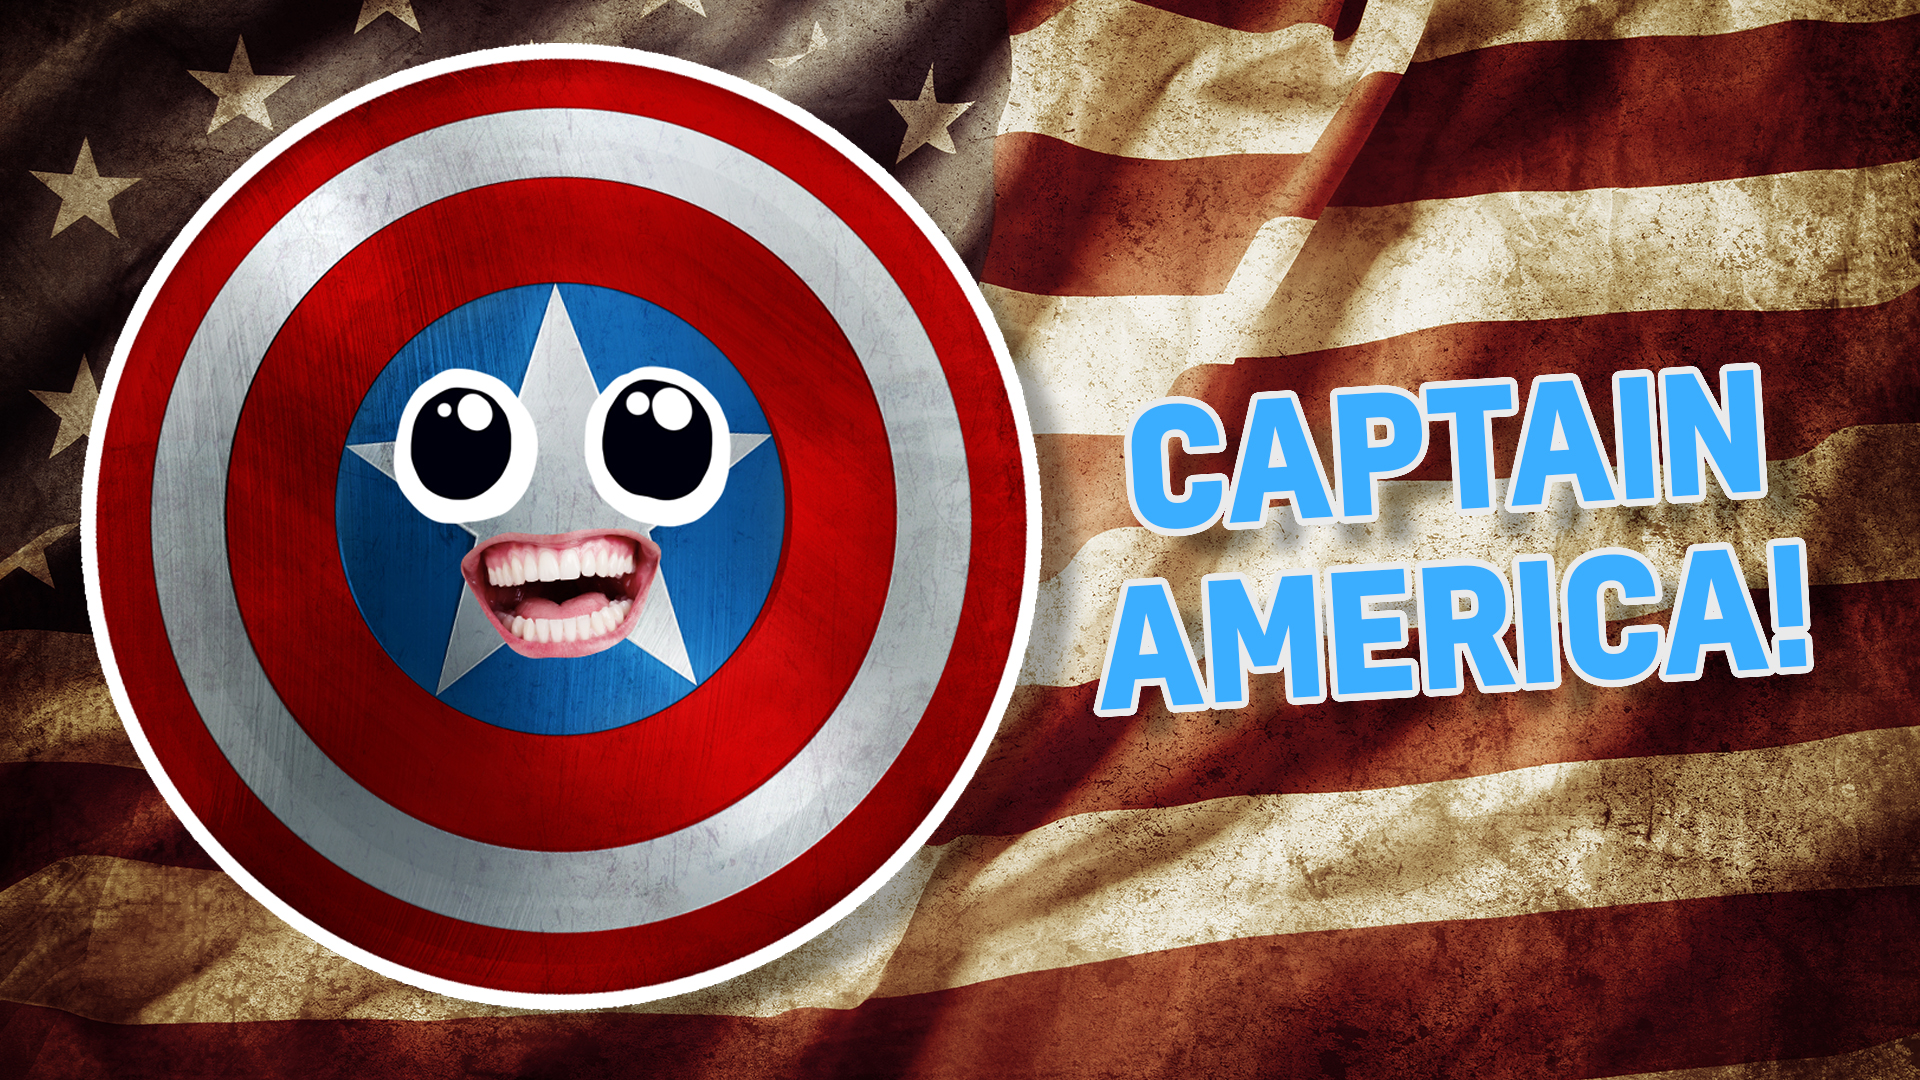 Result: Captain America